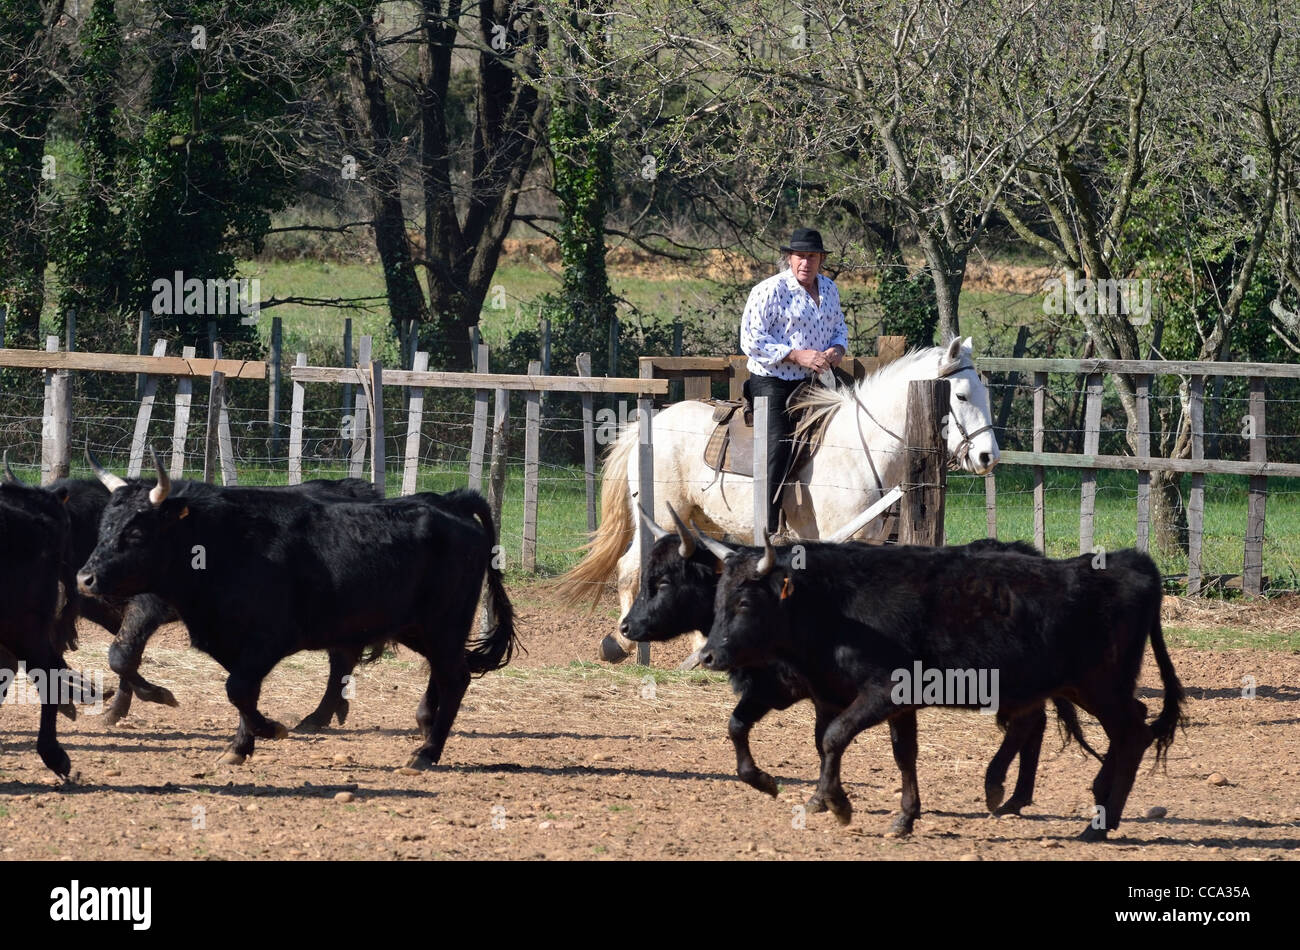 Gardian (Camargue cowboys) on horse assembling bulls in paddock, Camargue, France Stock Photo